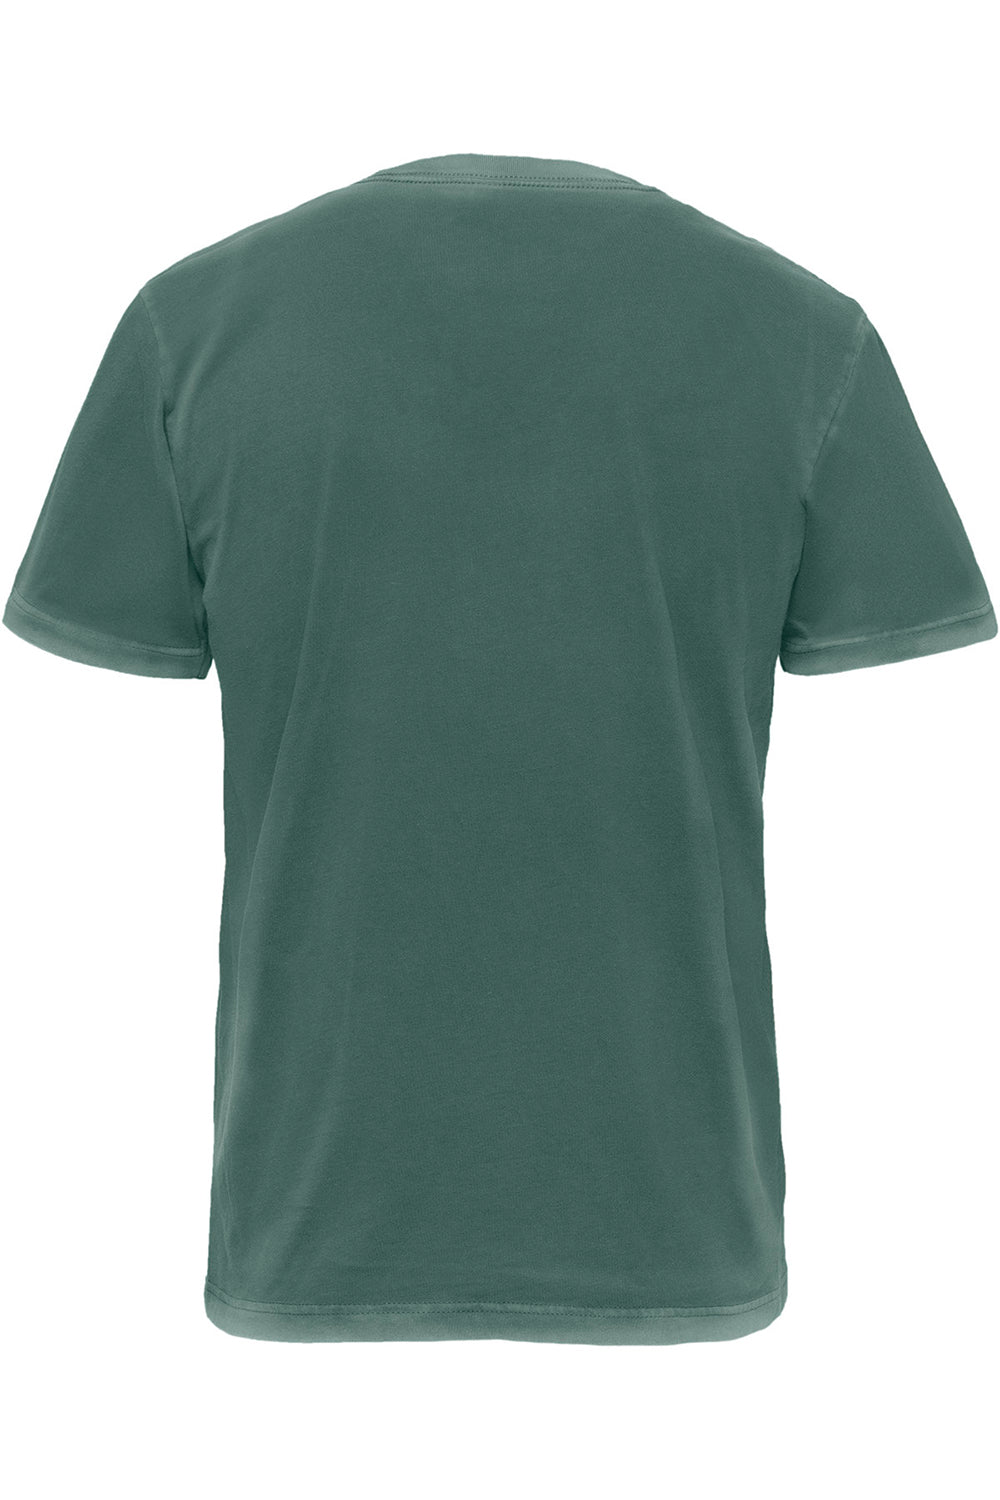 Next Level 3600SW Mens Soft Wash Short Sleeve Crewneck T-Shirt Royal Pine Green Flat Back